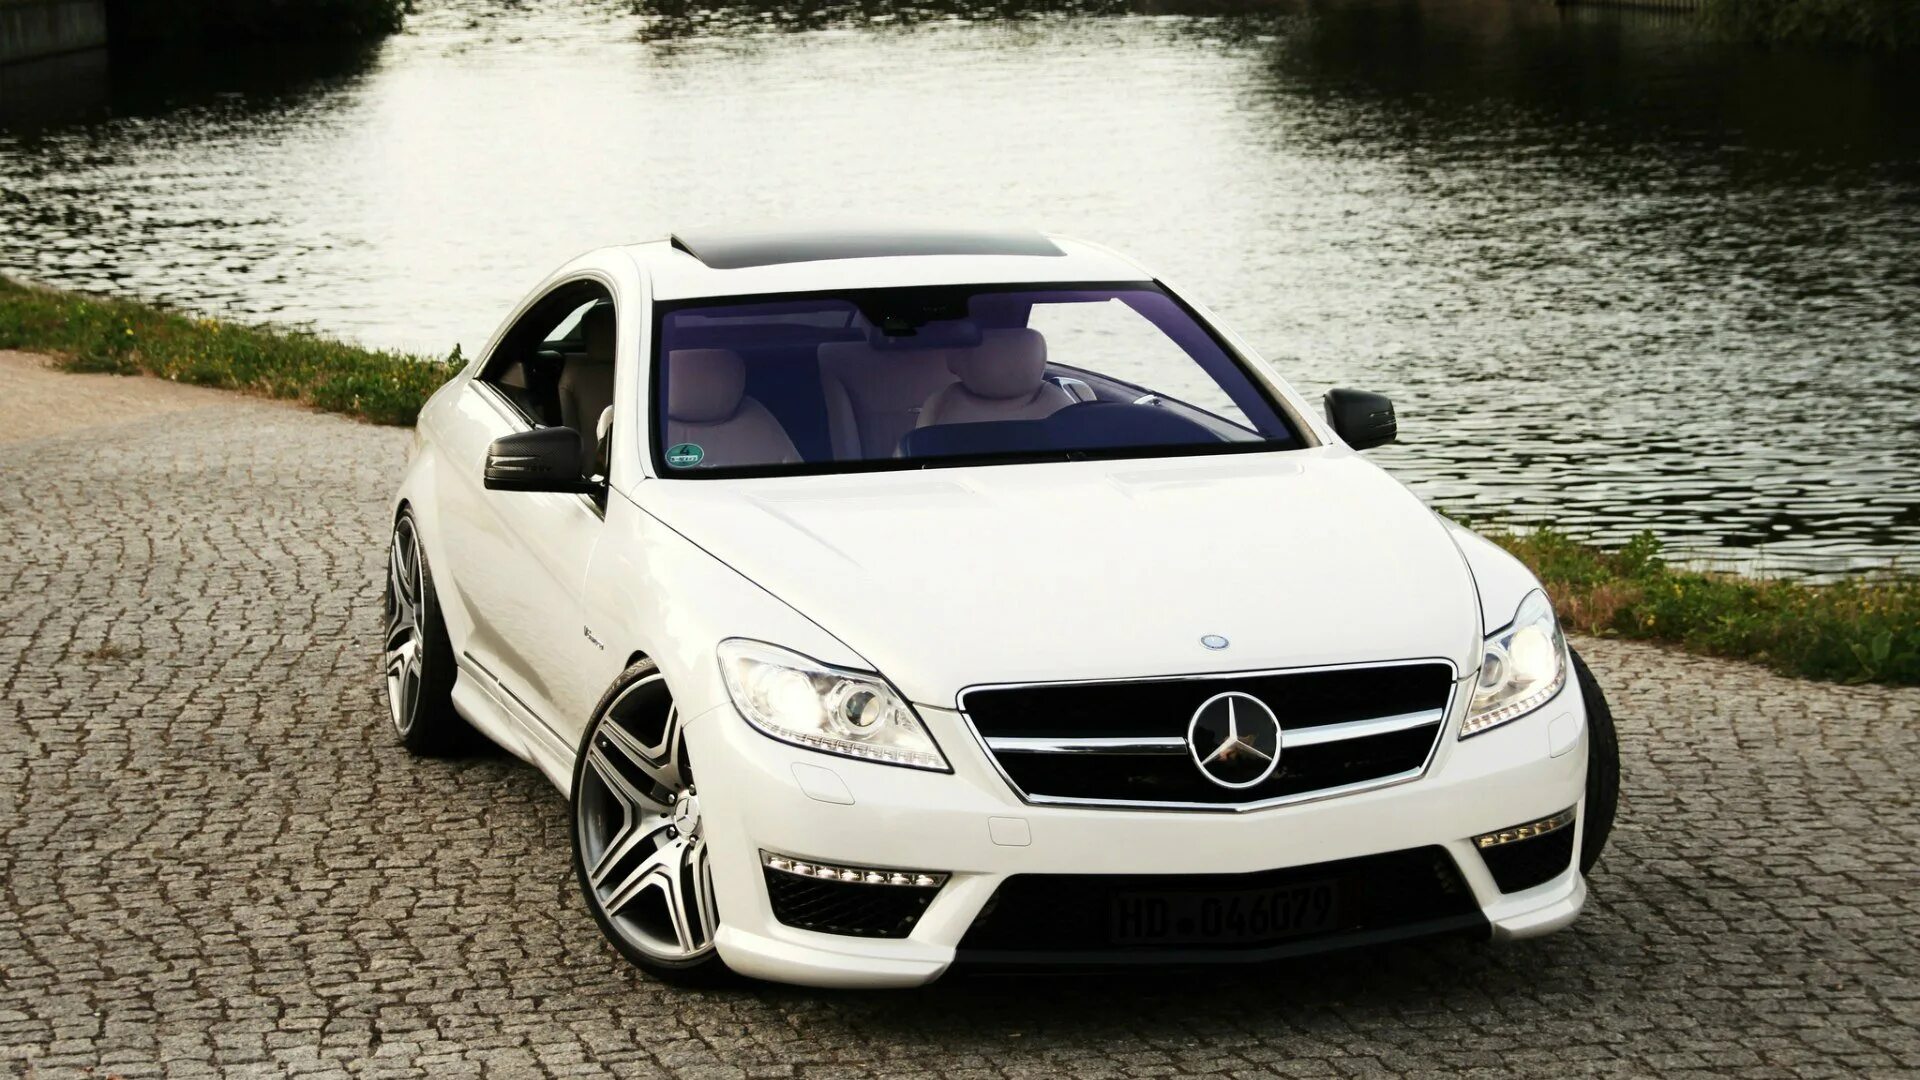 Машина мерседес фото. Мерседес АМГ белый. Белый Mercedes Benz AMG x253. Mercedes мерин. Белый Мерседес Бенц белый.